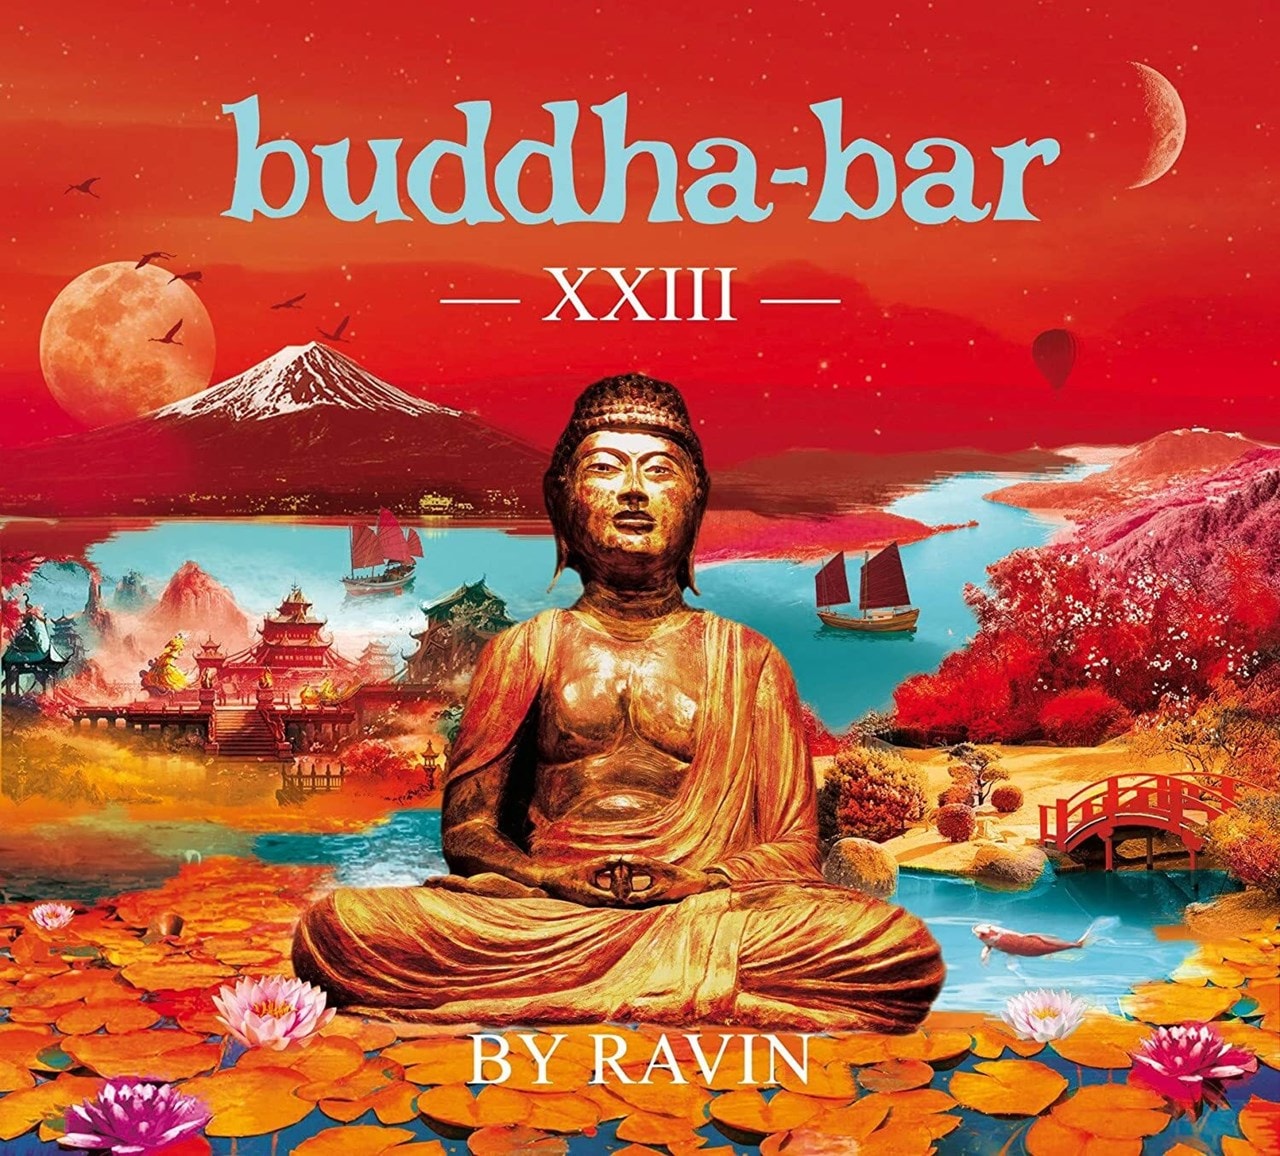 Buddhabar XXIII CD Album Free shipping over £20 HMV Store